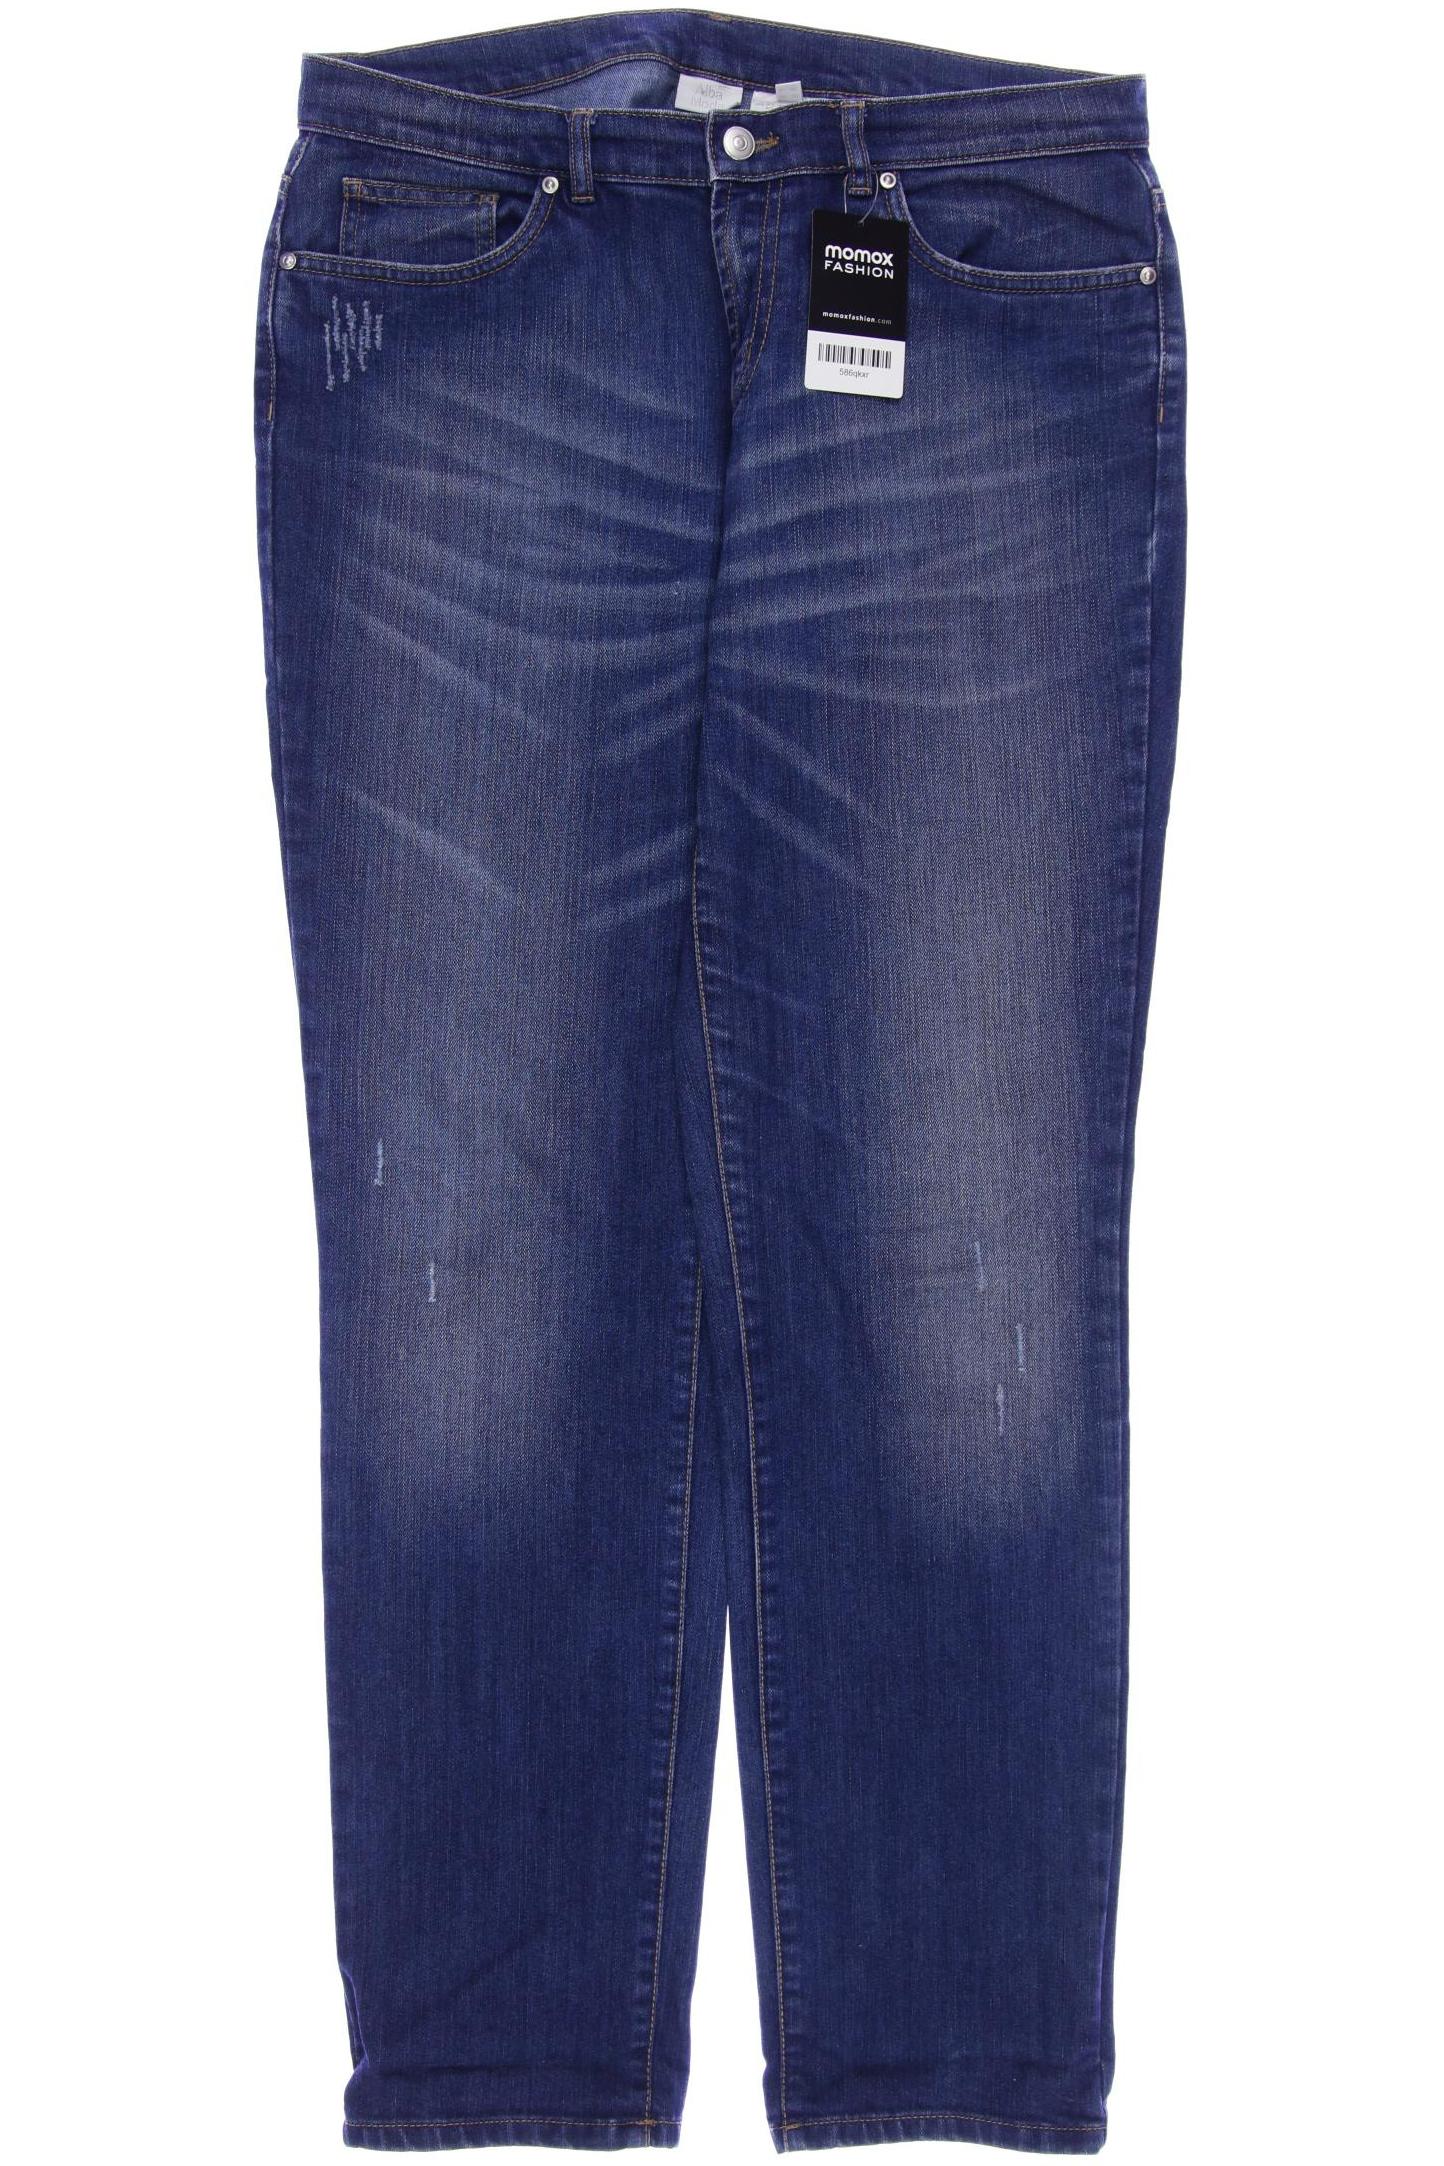 Alba Moda Damen Jeans, blau von alba moda